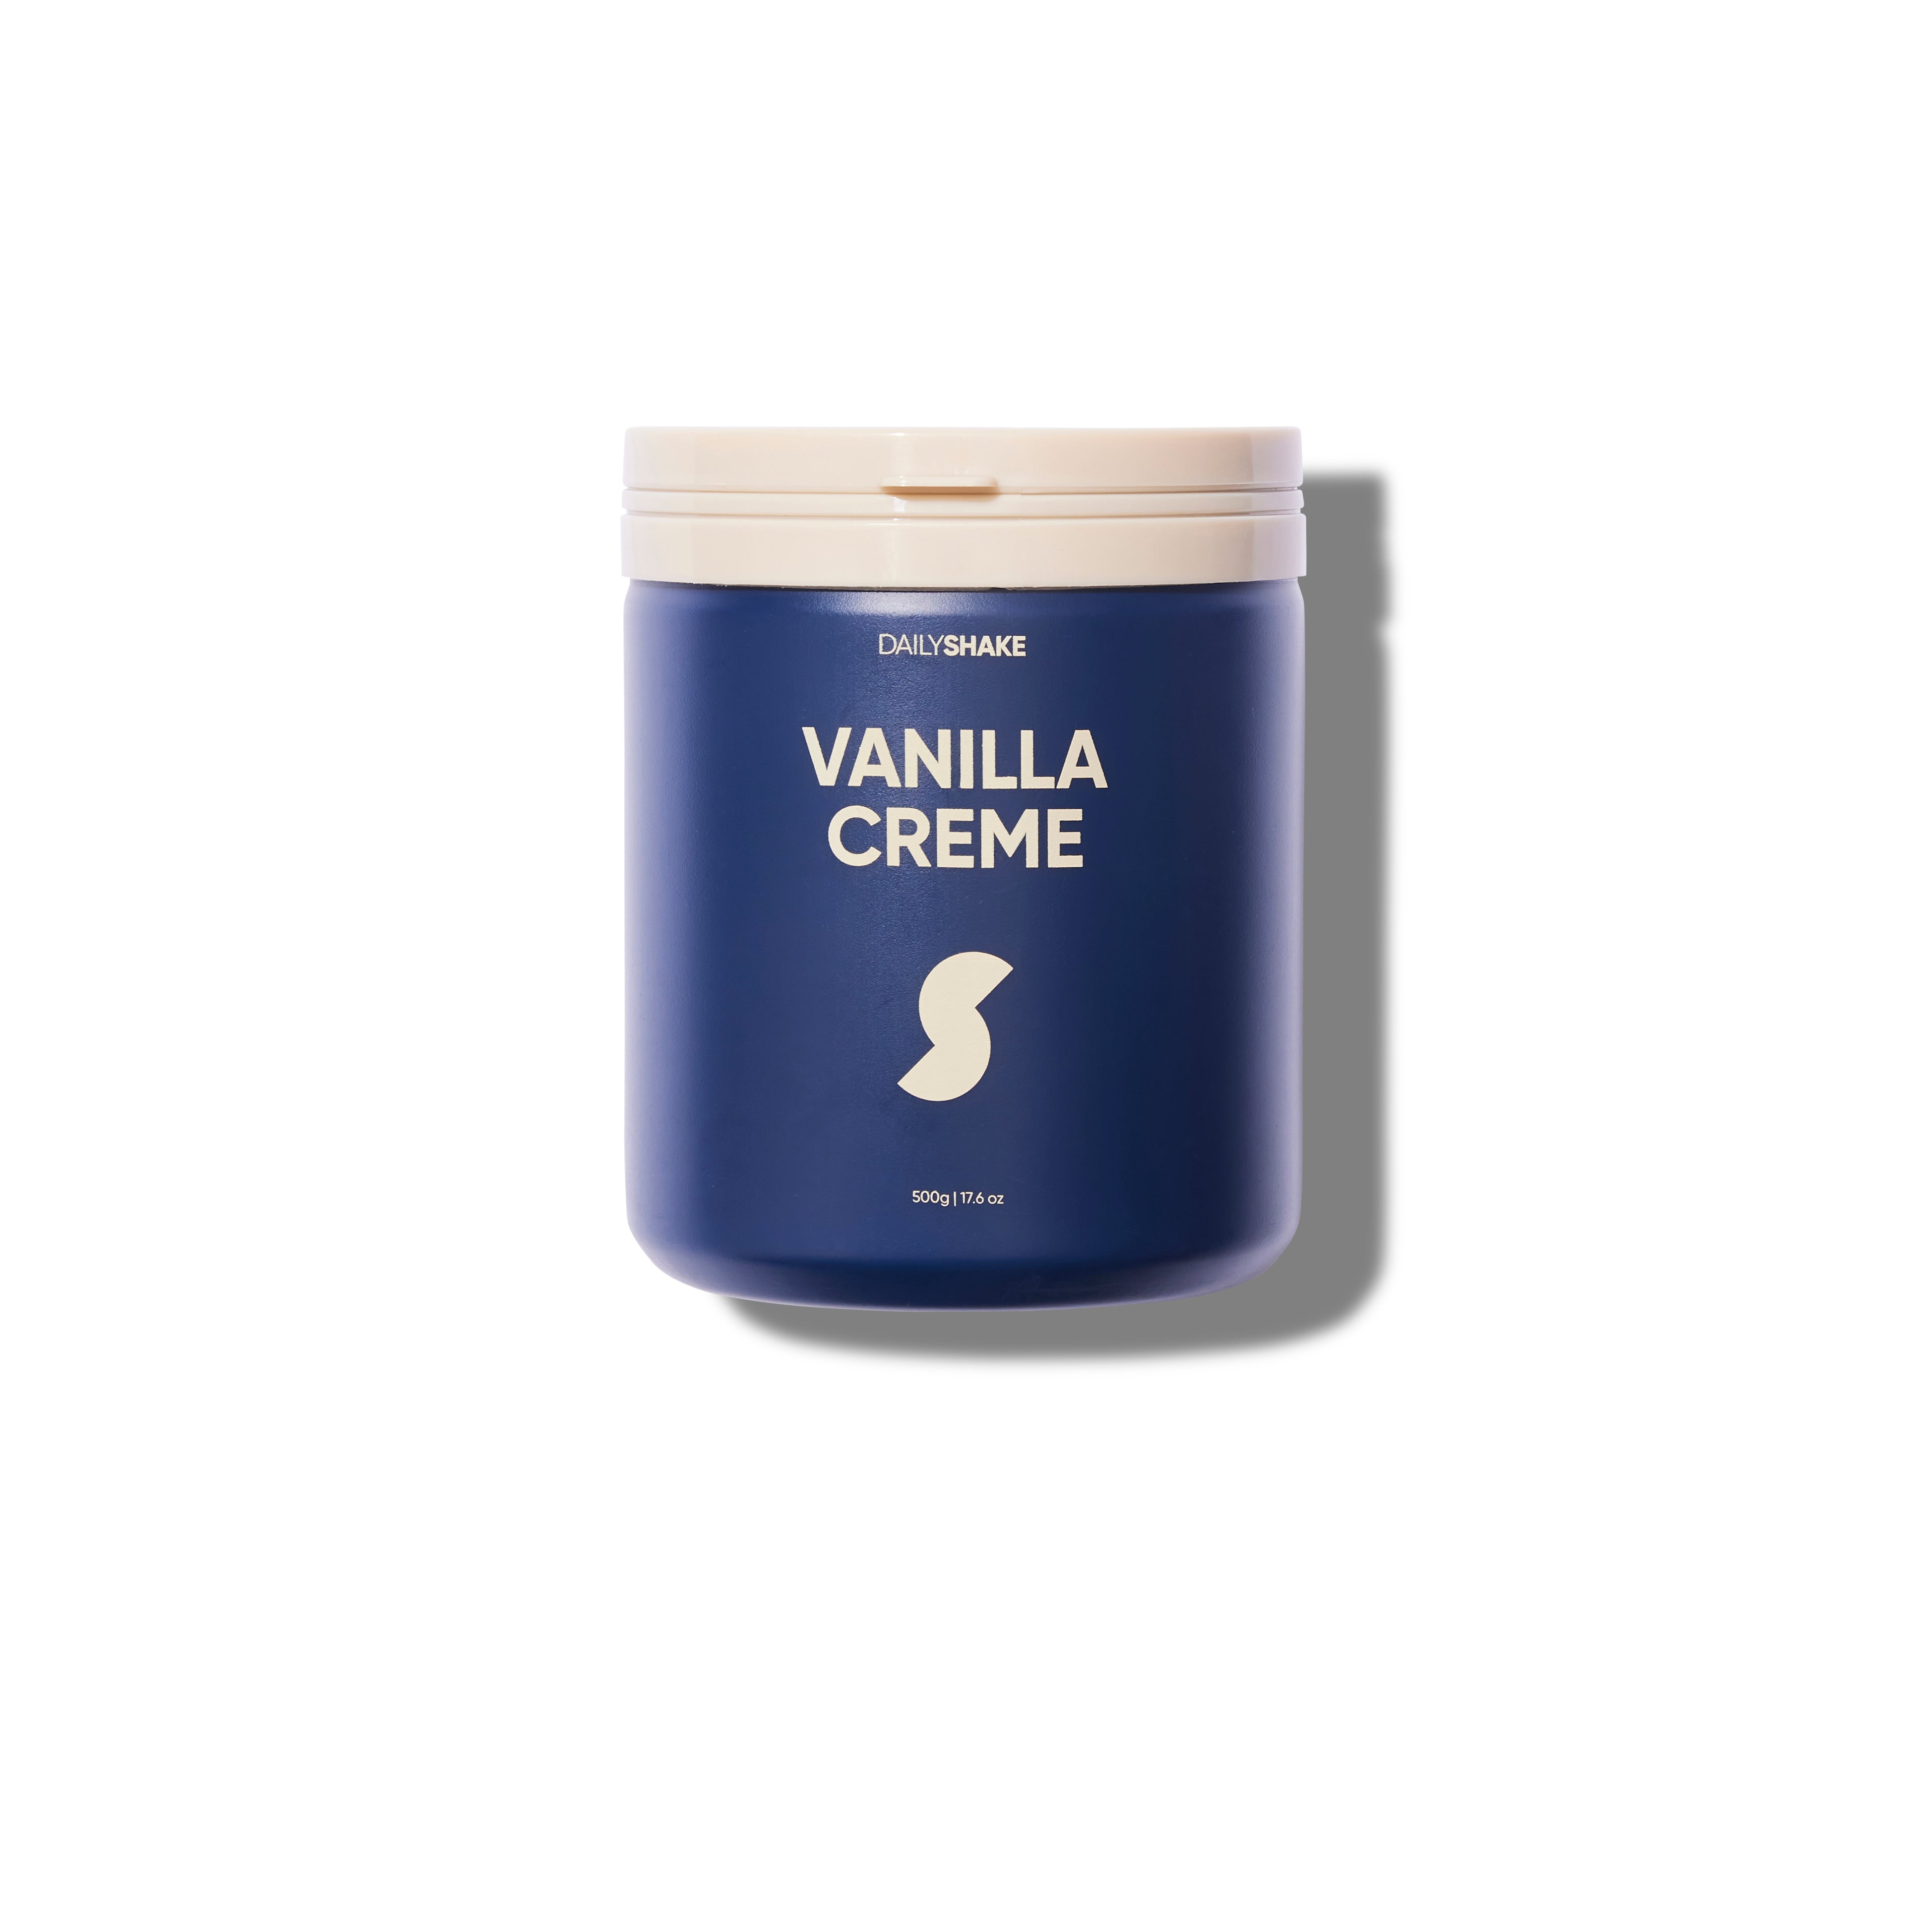  500g Vanilla Creme Jar